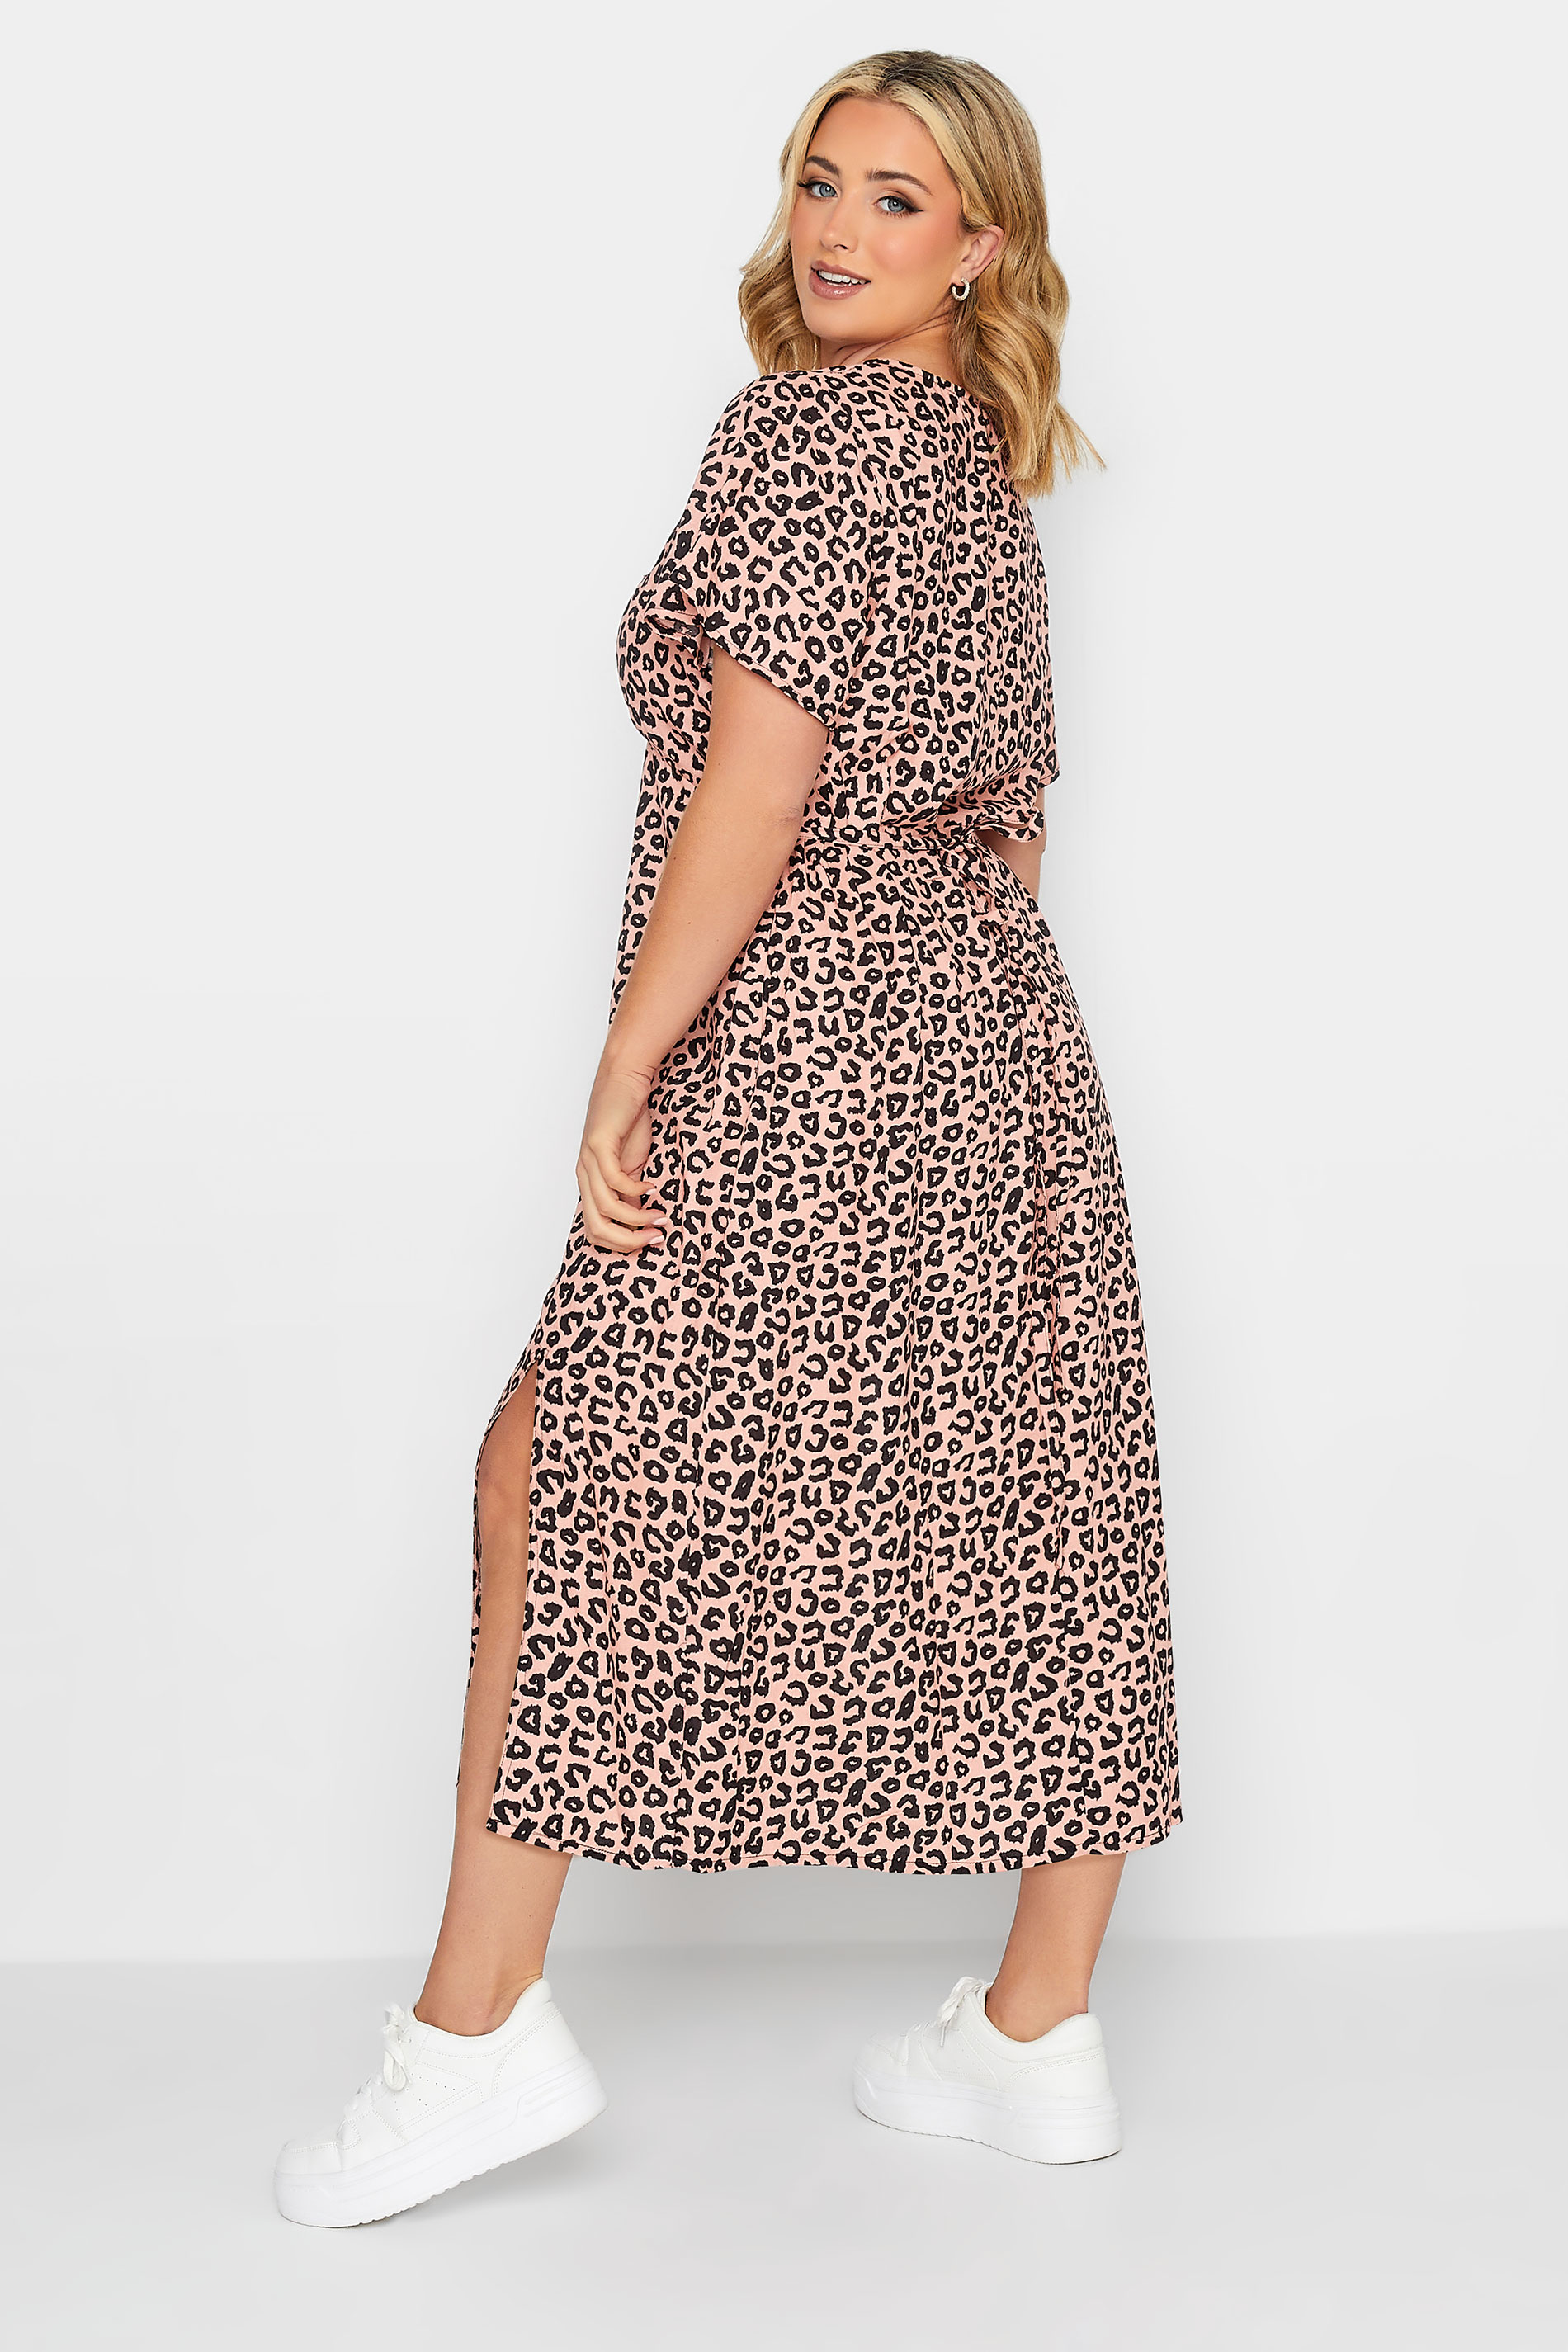 YOURS PETITE Plus Size Pink Leopard Print Midi Tea Dress | Yours Clothing 3